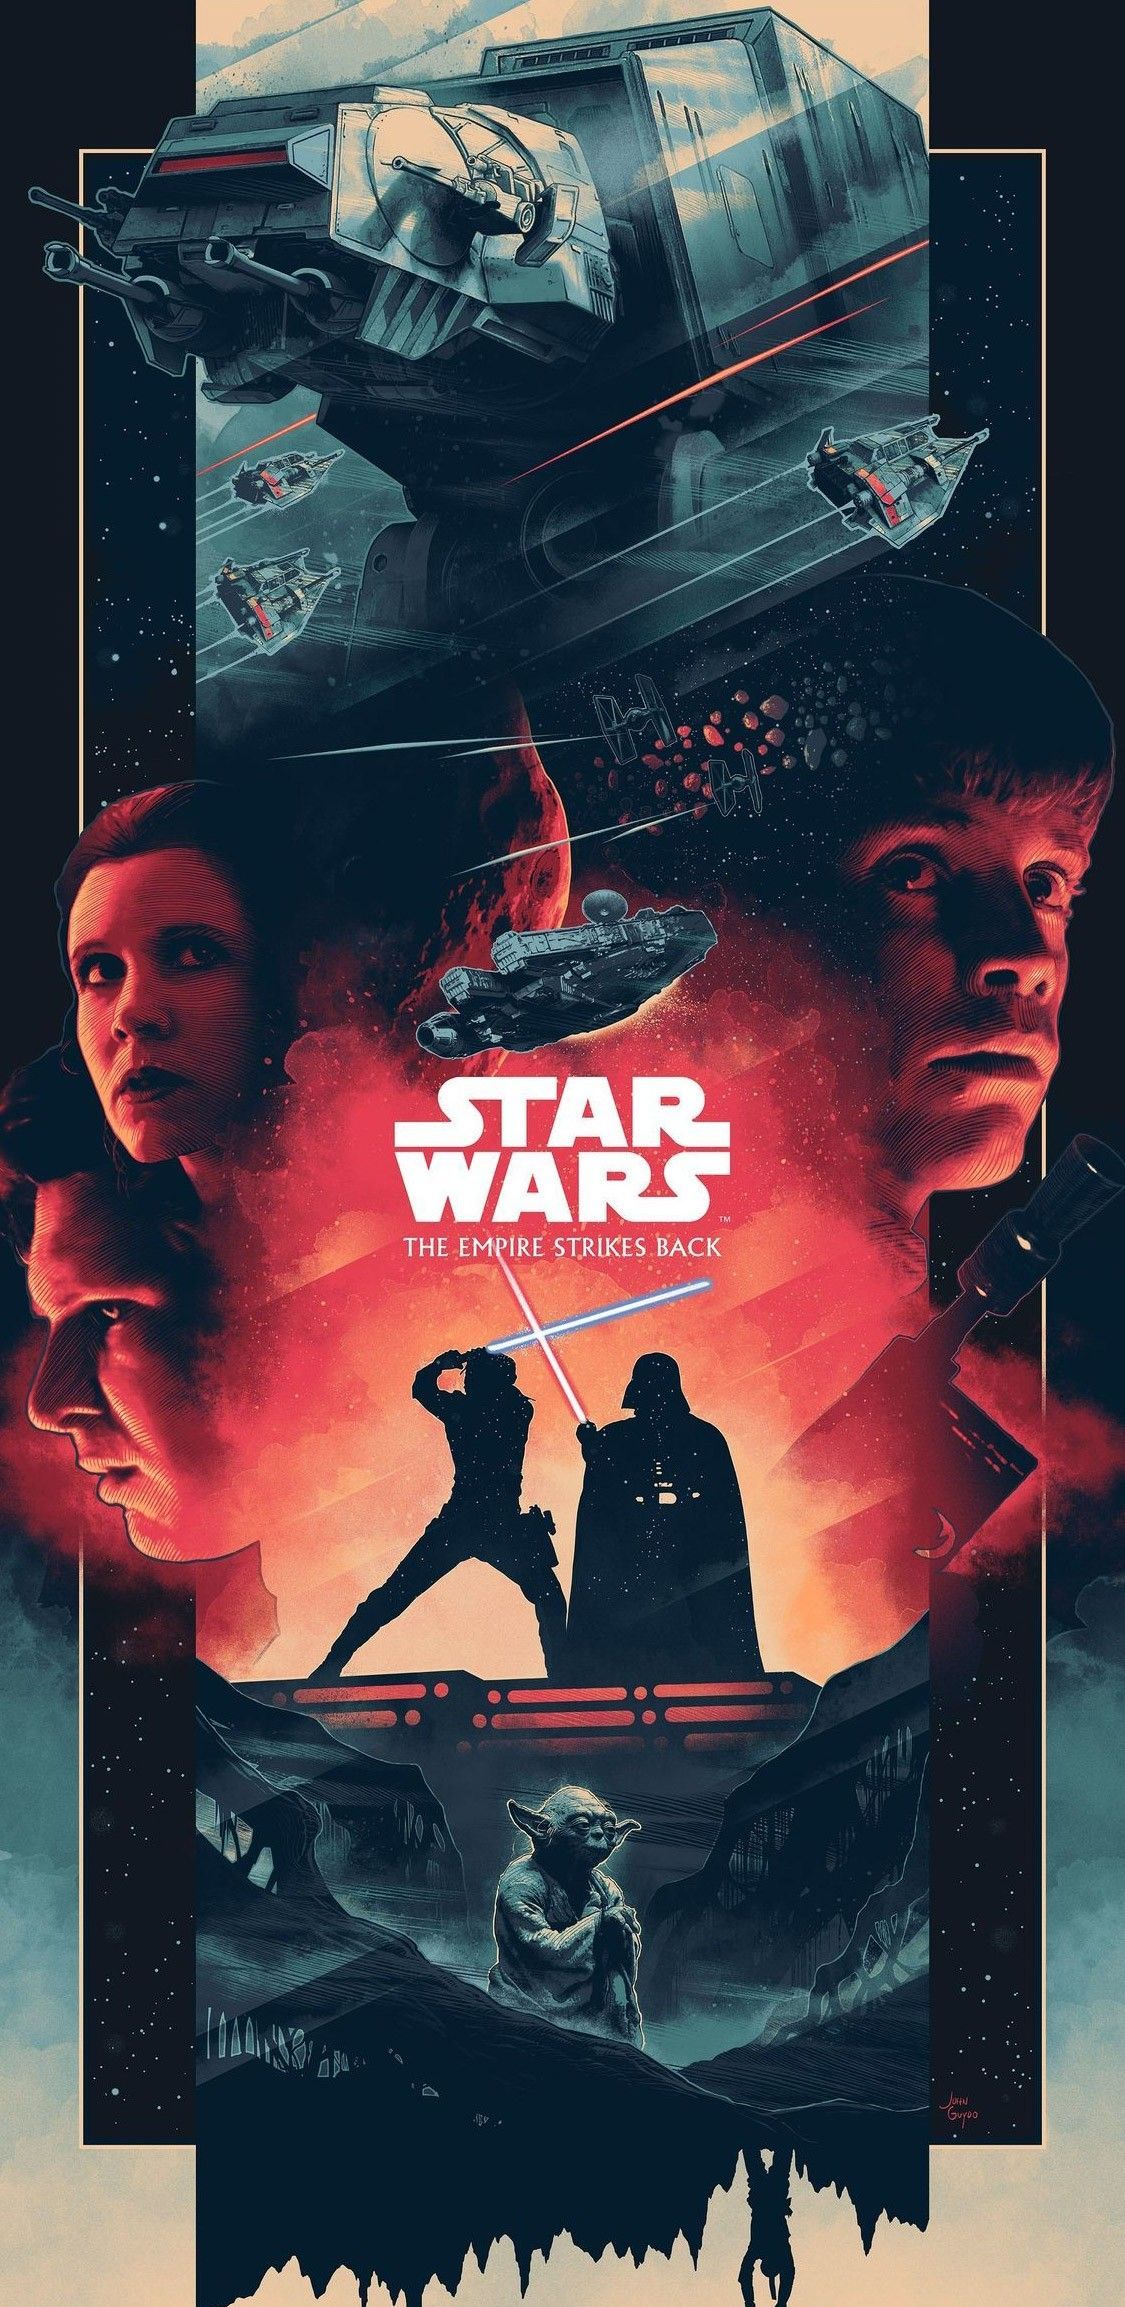 Star Wars, Empire Strikes Back, Bespin, Lightsaber Duel, Darth Vader, Luke Skywalker, Han So. Star wars trilogy poster, Star wars movies posters, Star wars poster